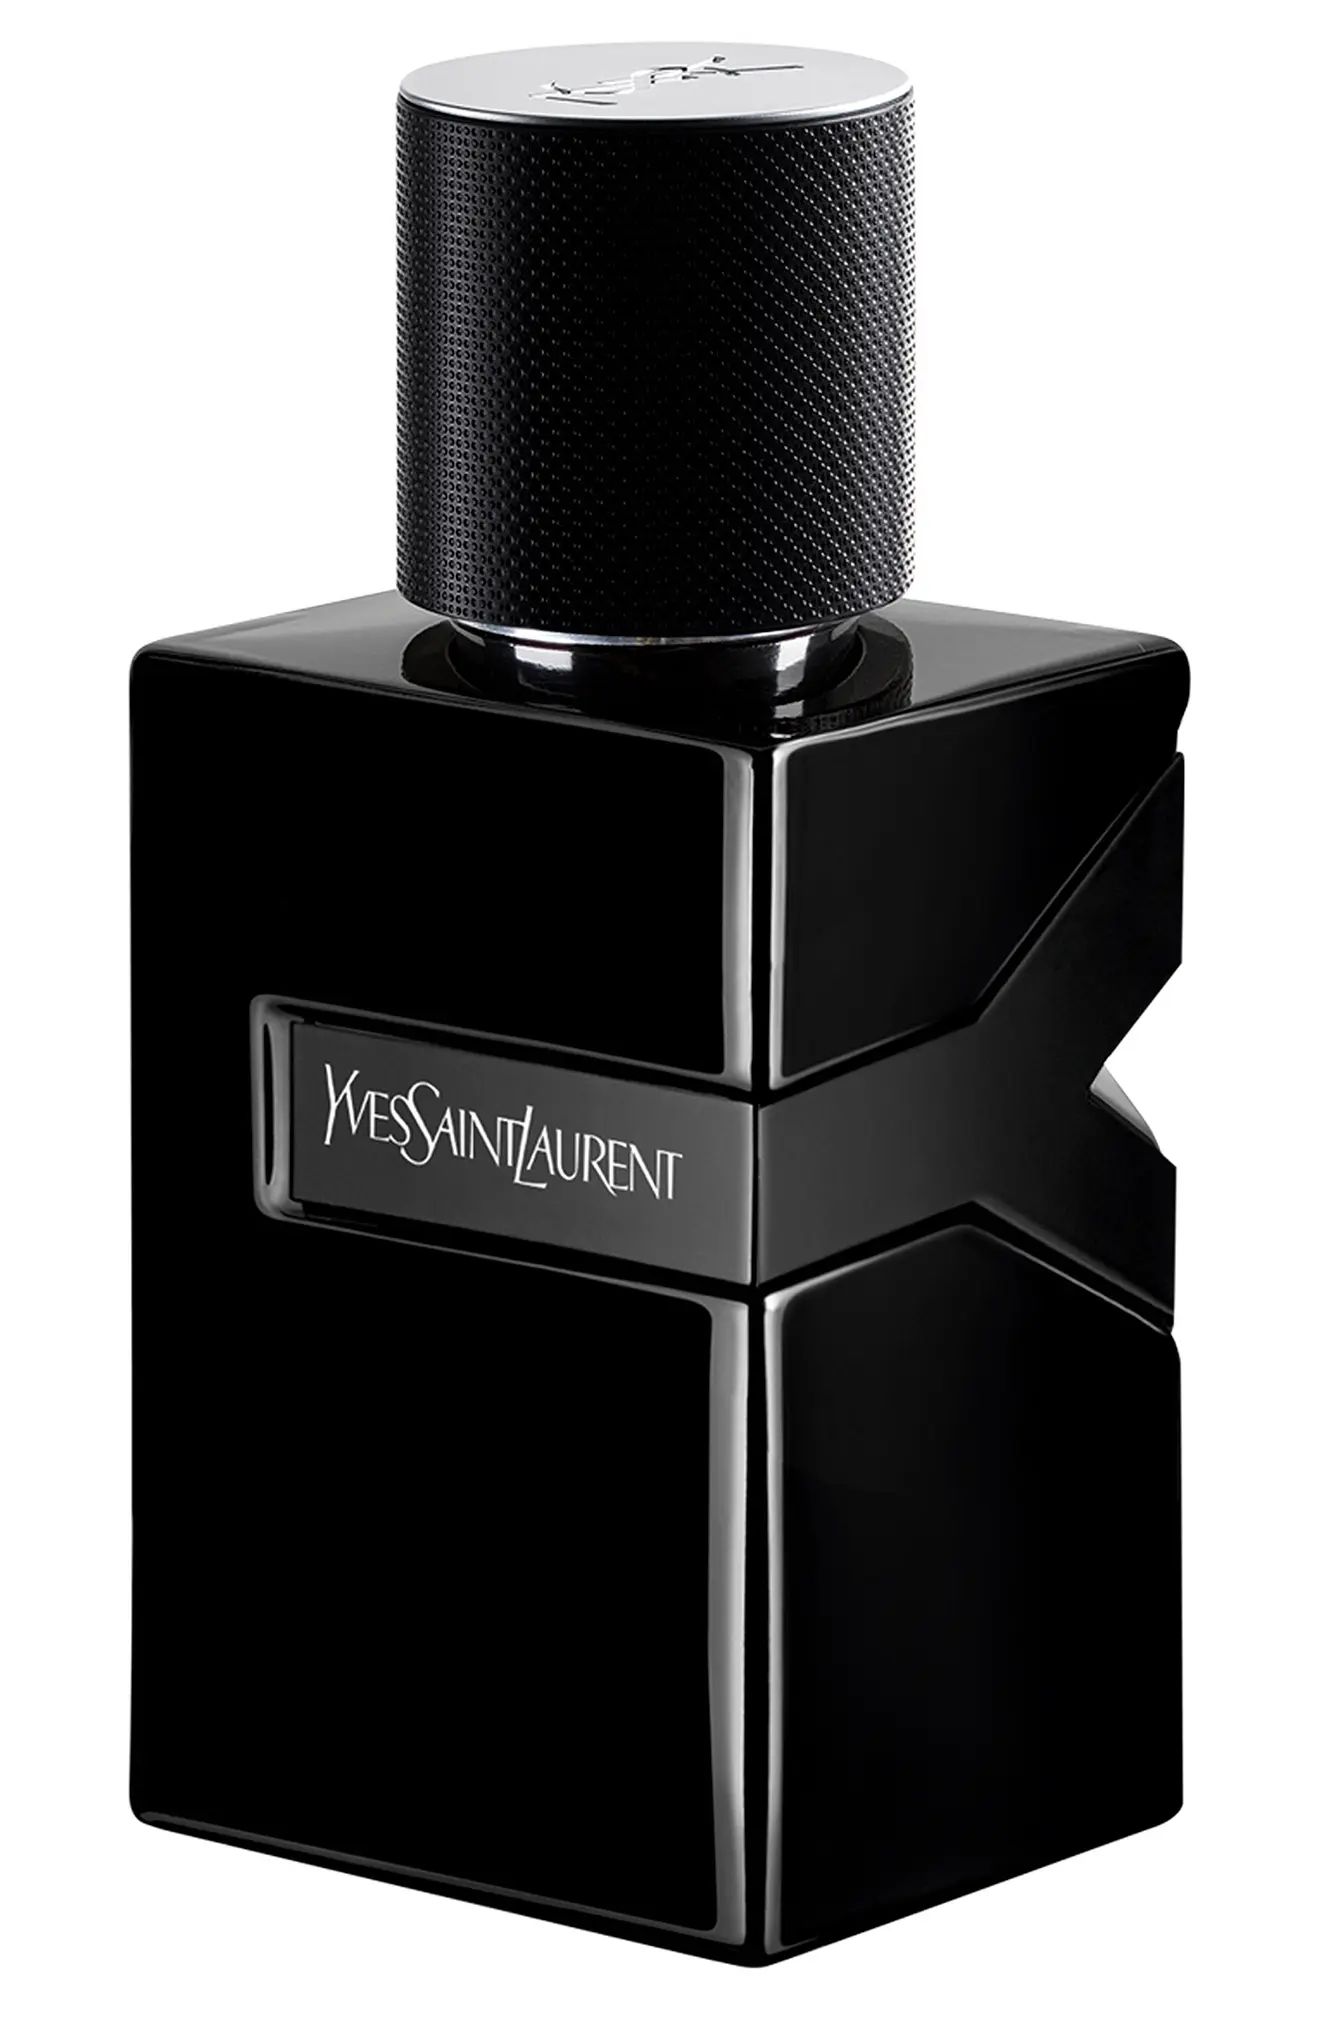 Yves Saint Laurent Y Le Parfum, Size 3.4 Oz at Nordstrom | Nordstrom